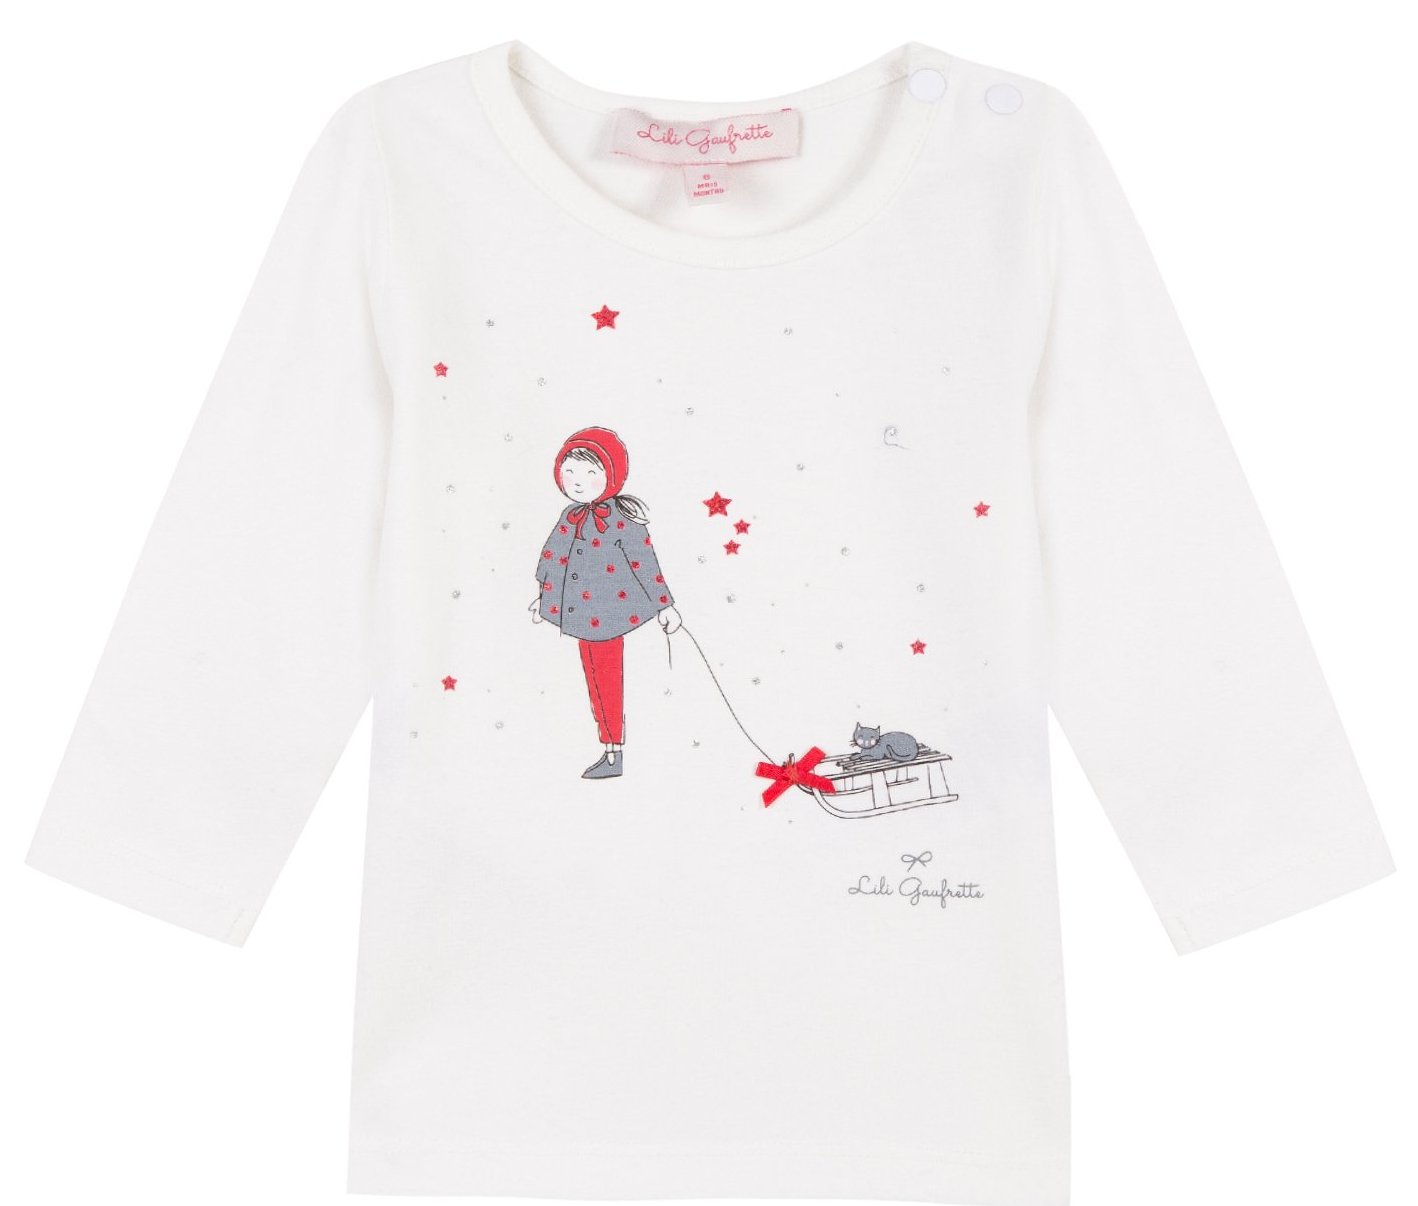 Lili Gaufrette Lhiver Girl Printed Tee Shirt